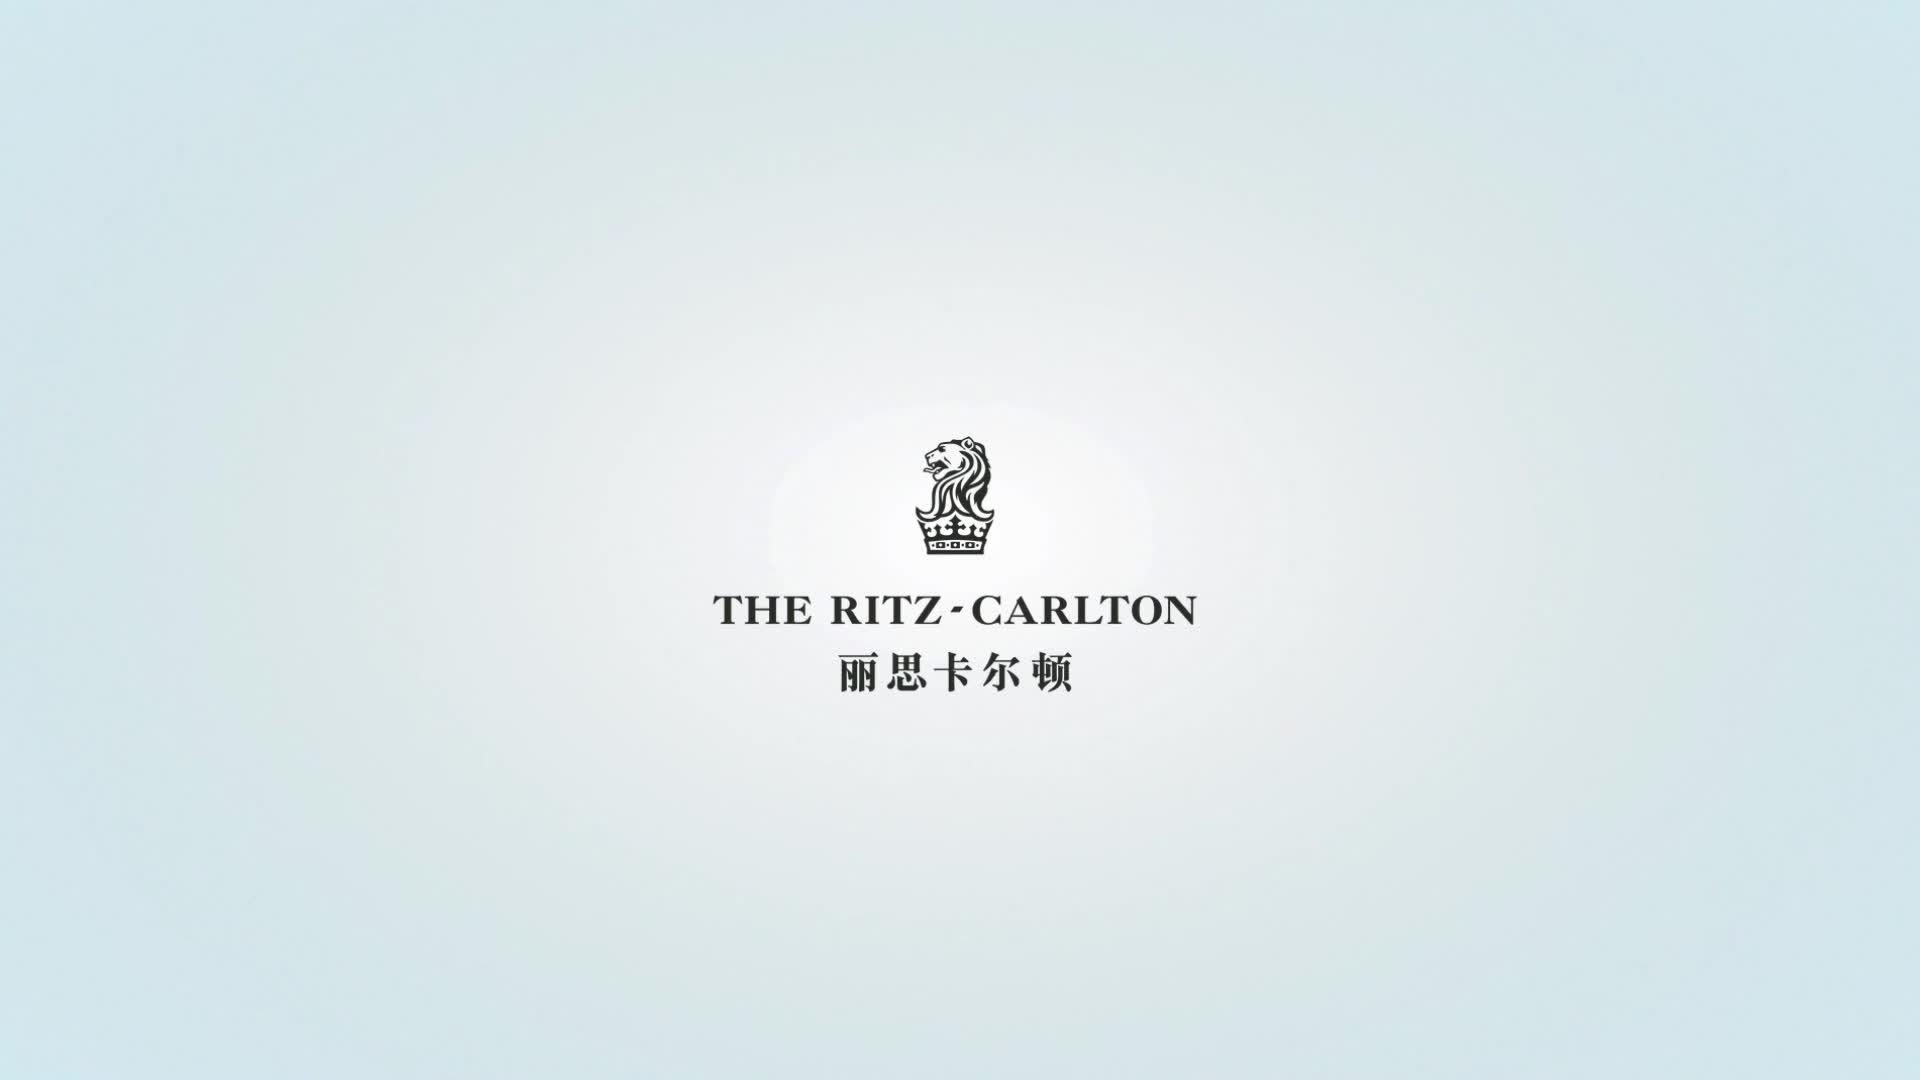 Ritz-Carlton – Back to the Stars